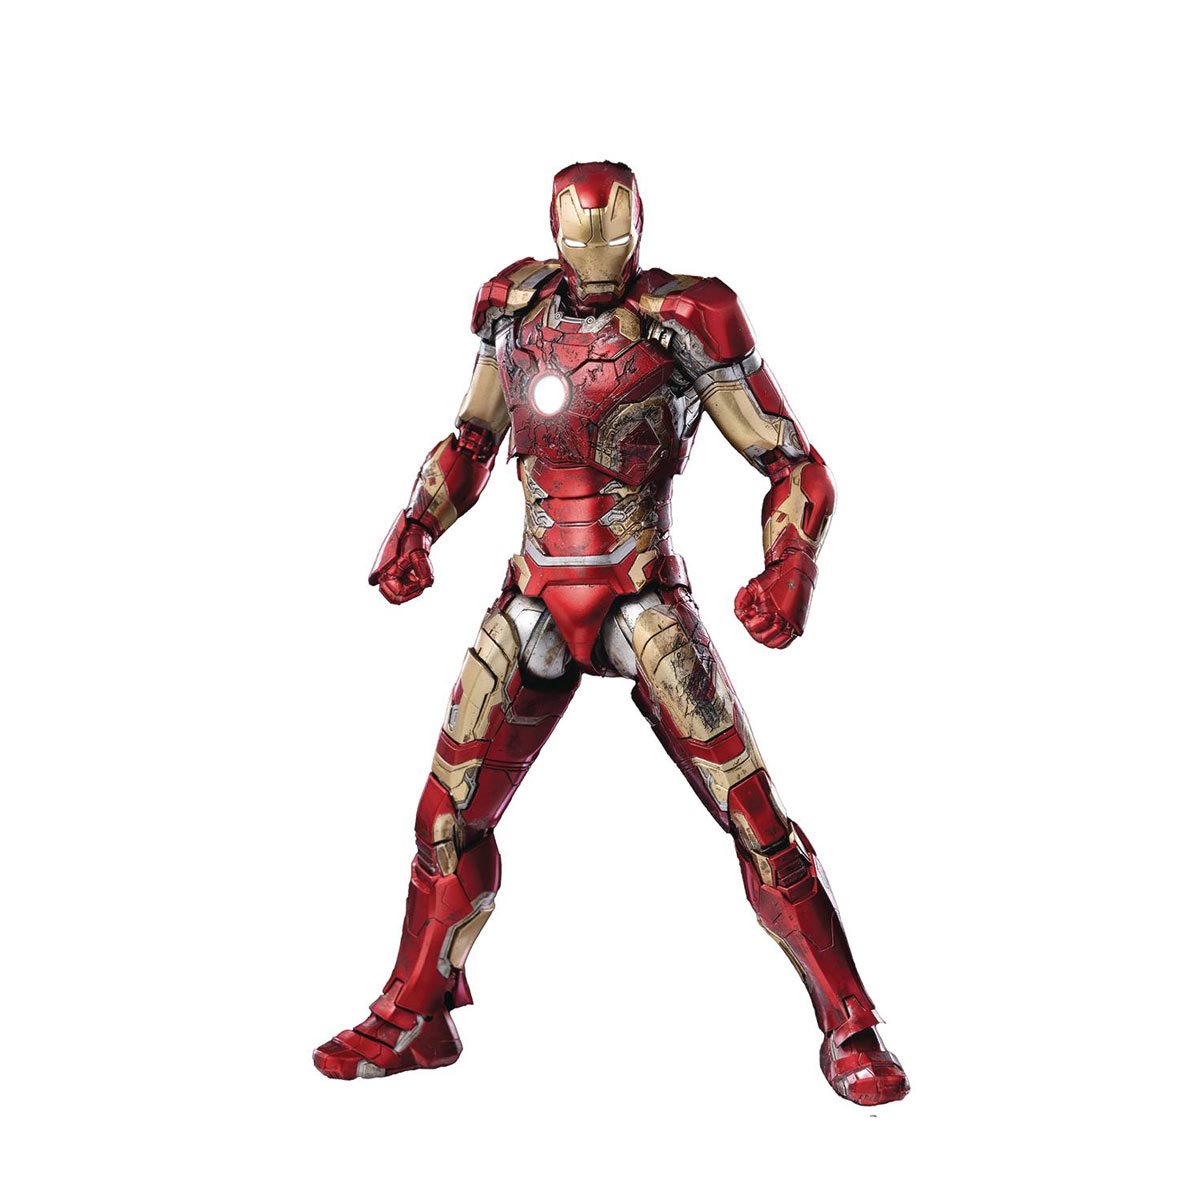 iron man mark 43 avengers 2